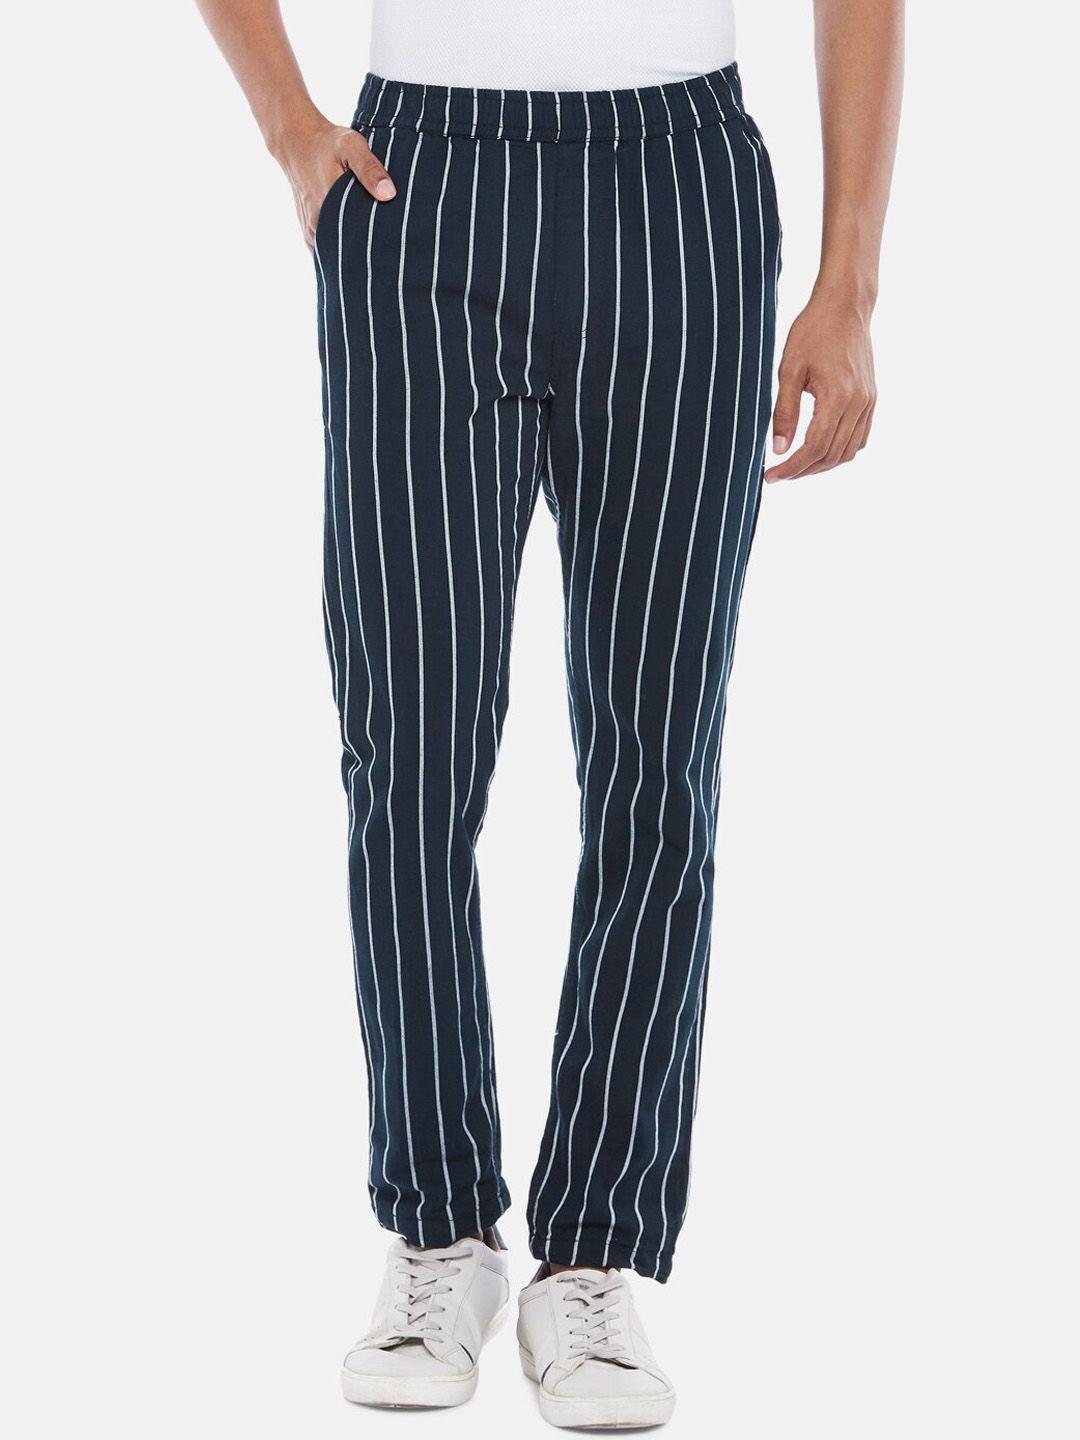 urban ranger by pantaloons men navy blue striped slim fit trousers